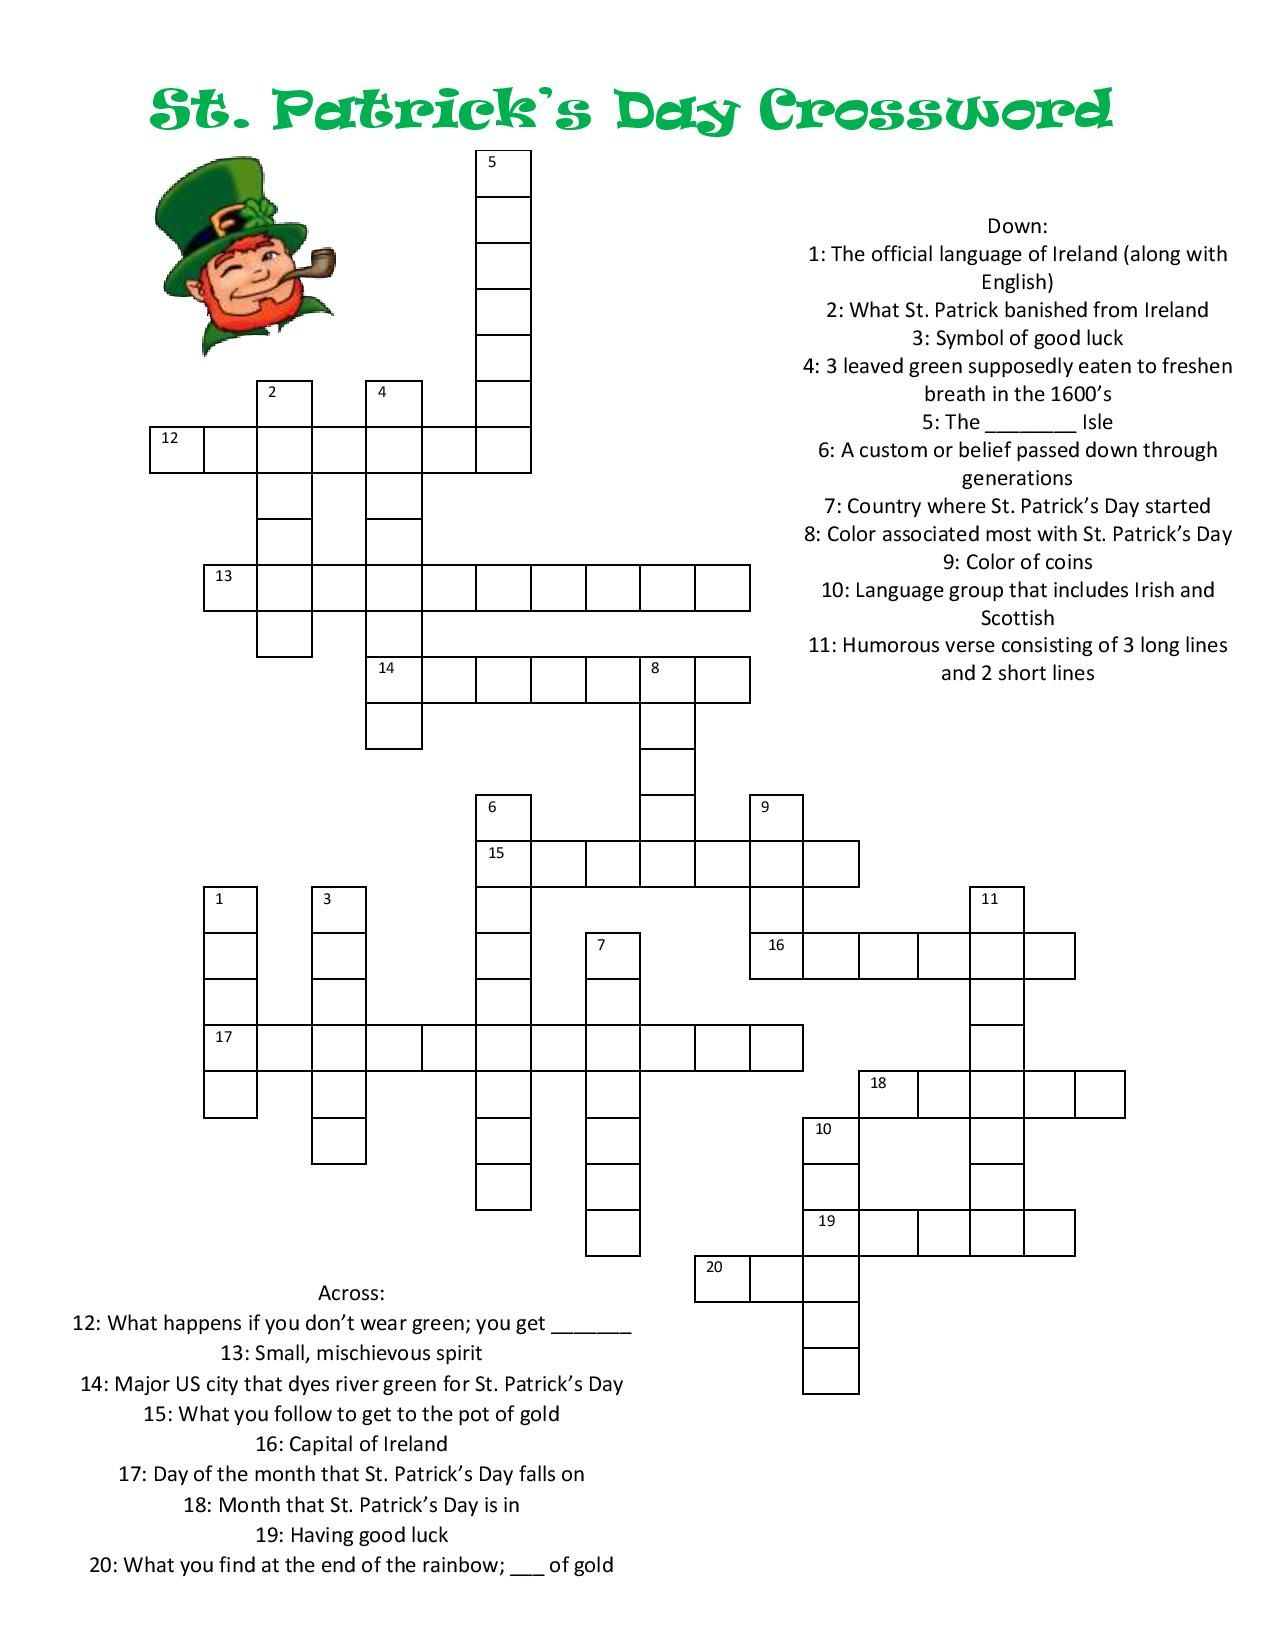 St Patrick's Day 2022 Crossword Puzzle Printable